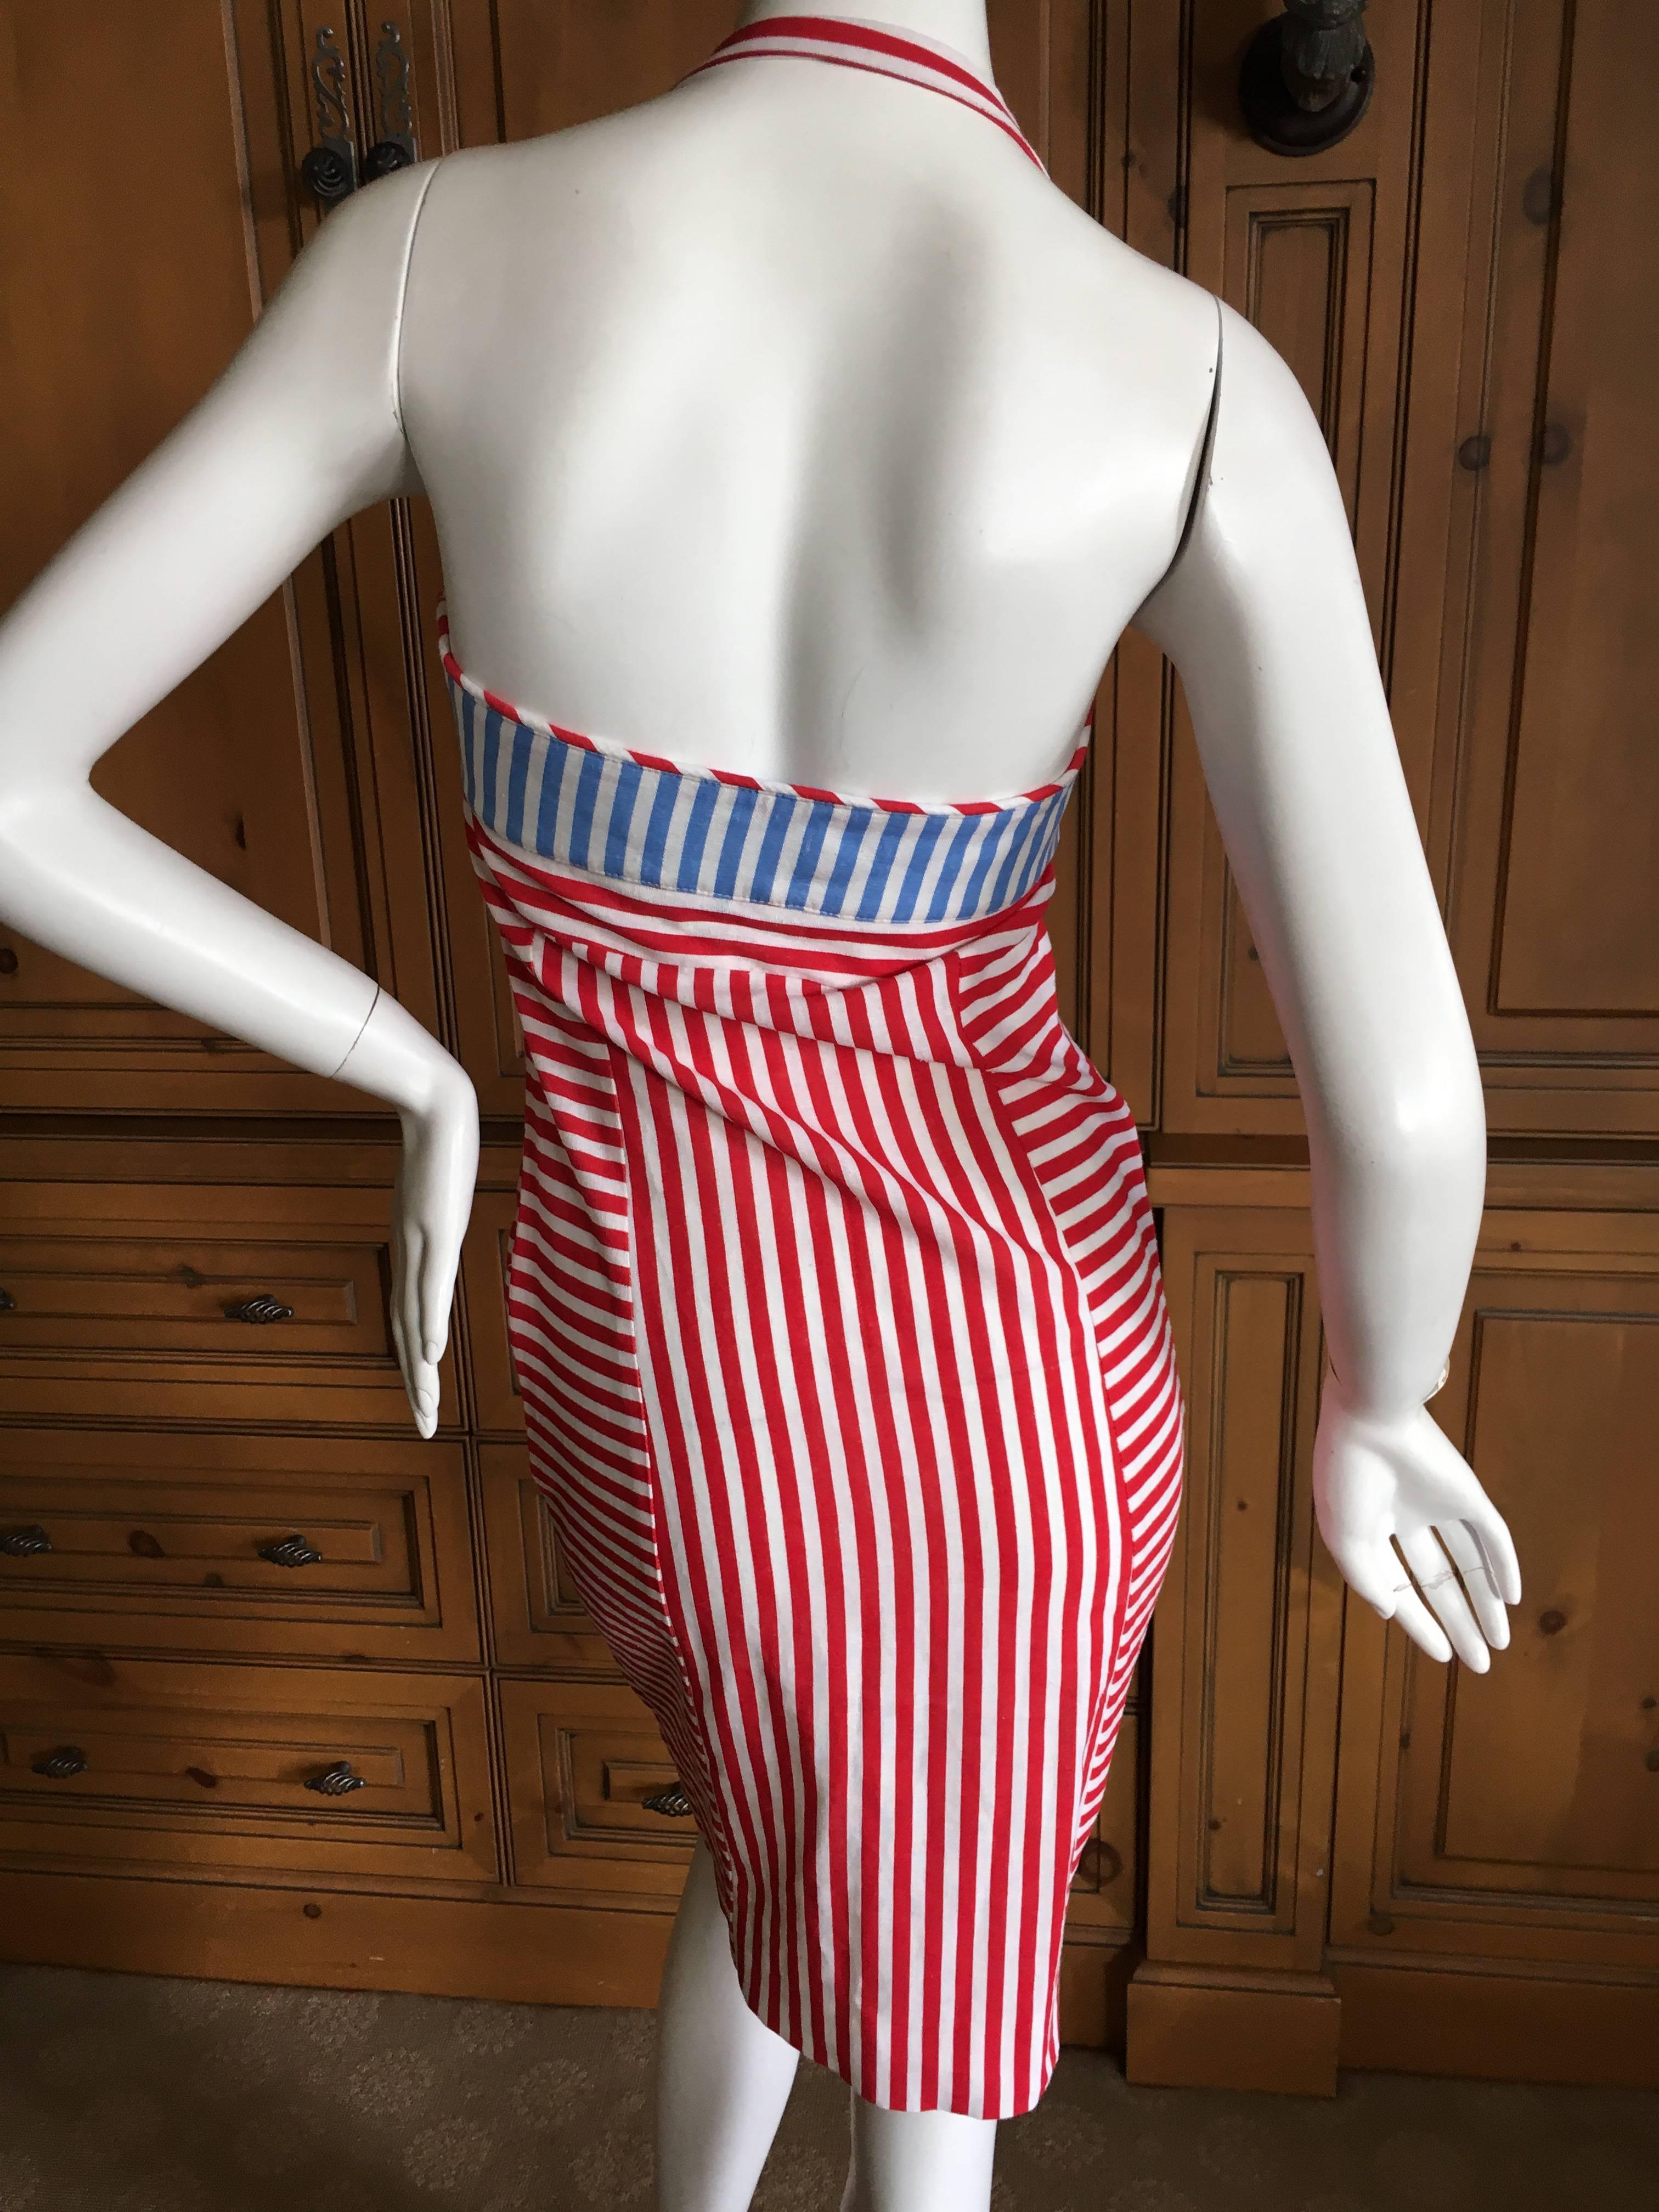 Jean-Charles de Castelbajac Patriotic Stripe Linen Day Dress
So chic
Size 38